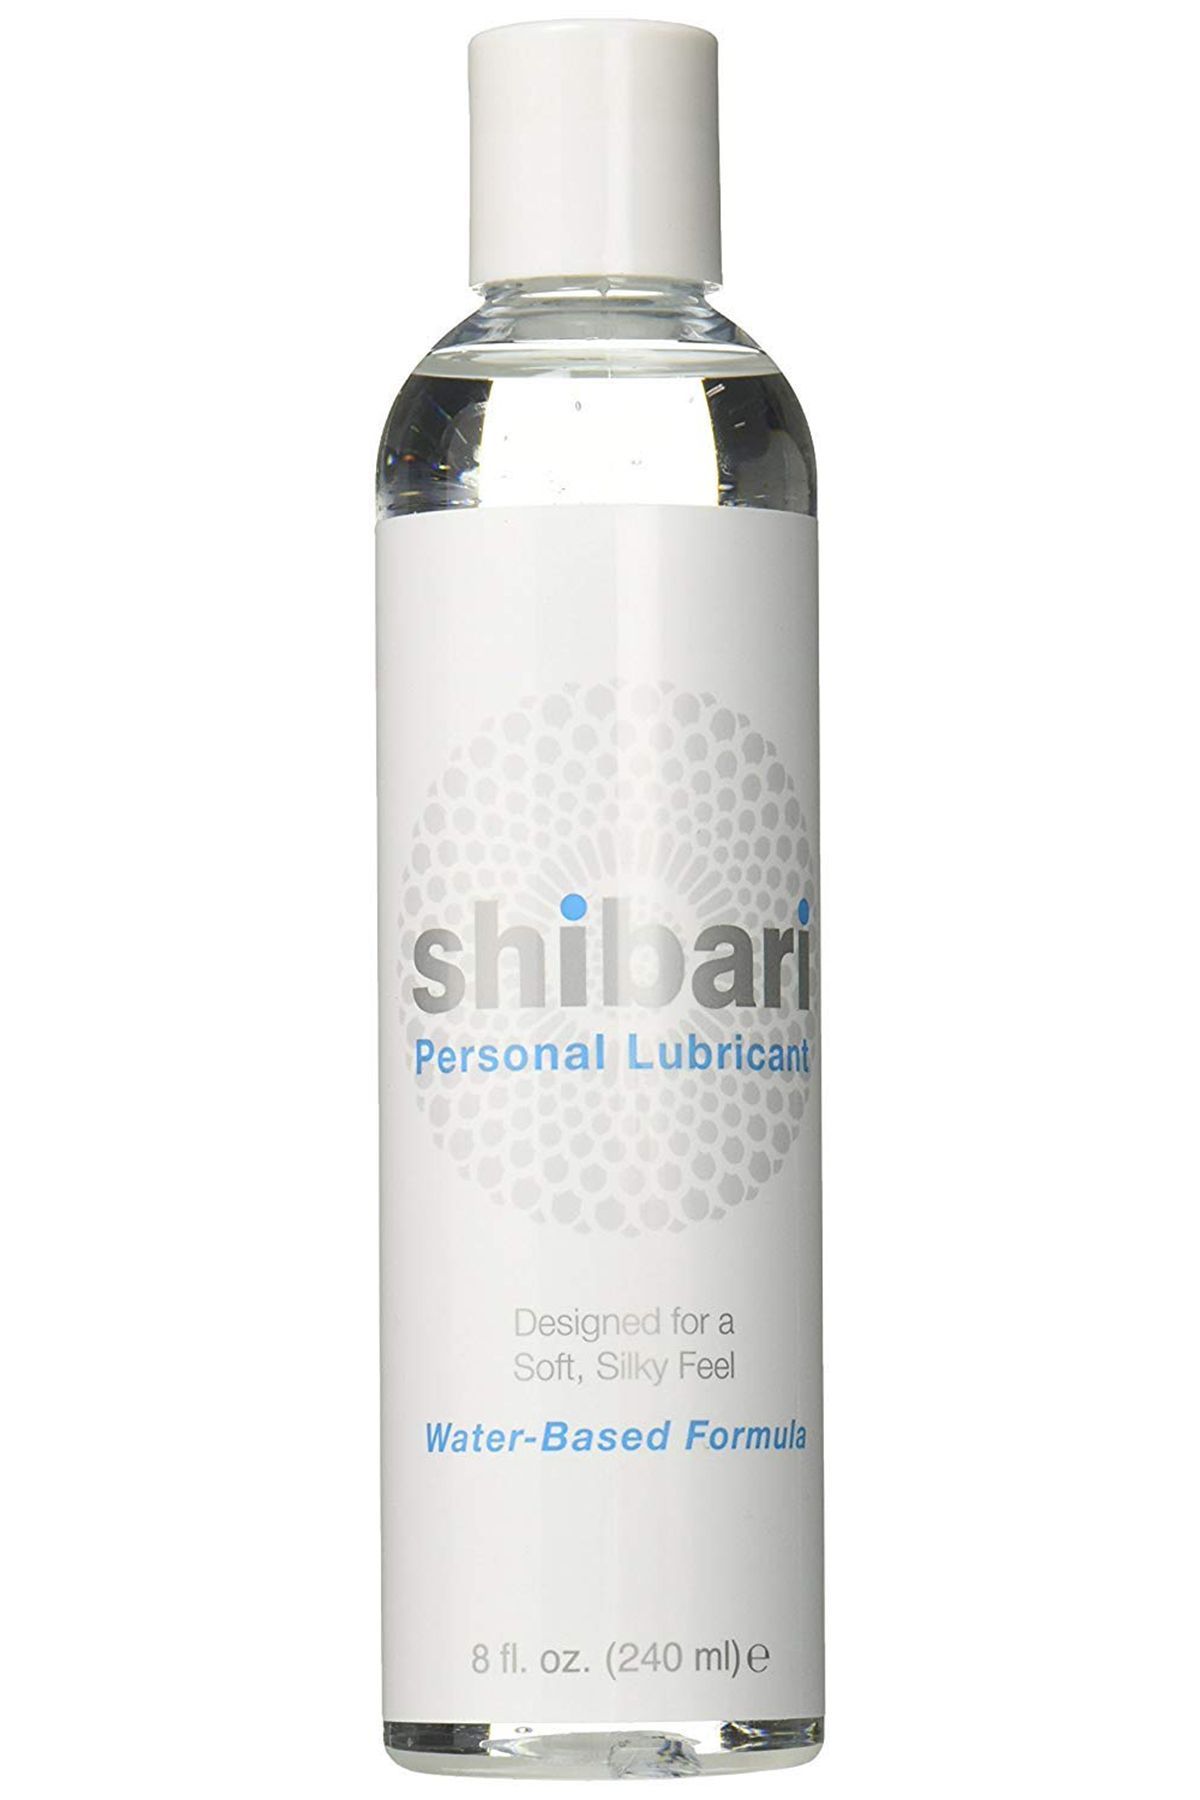 Shibari Personal Lubricant